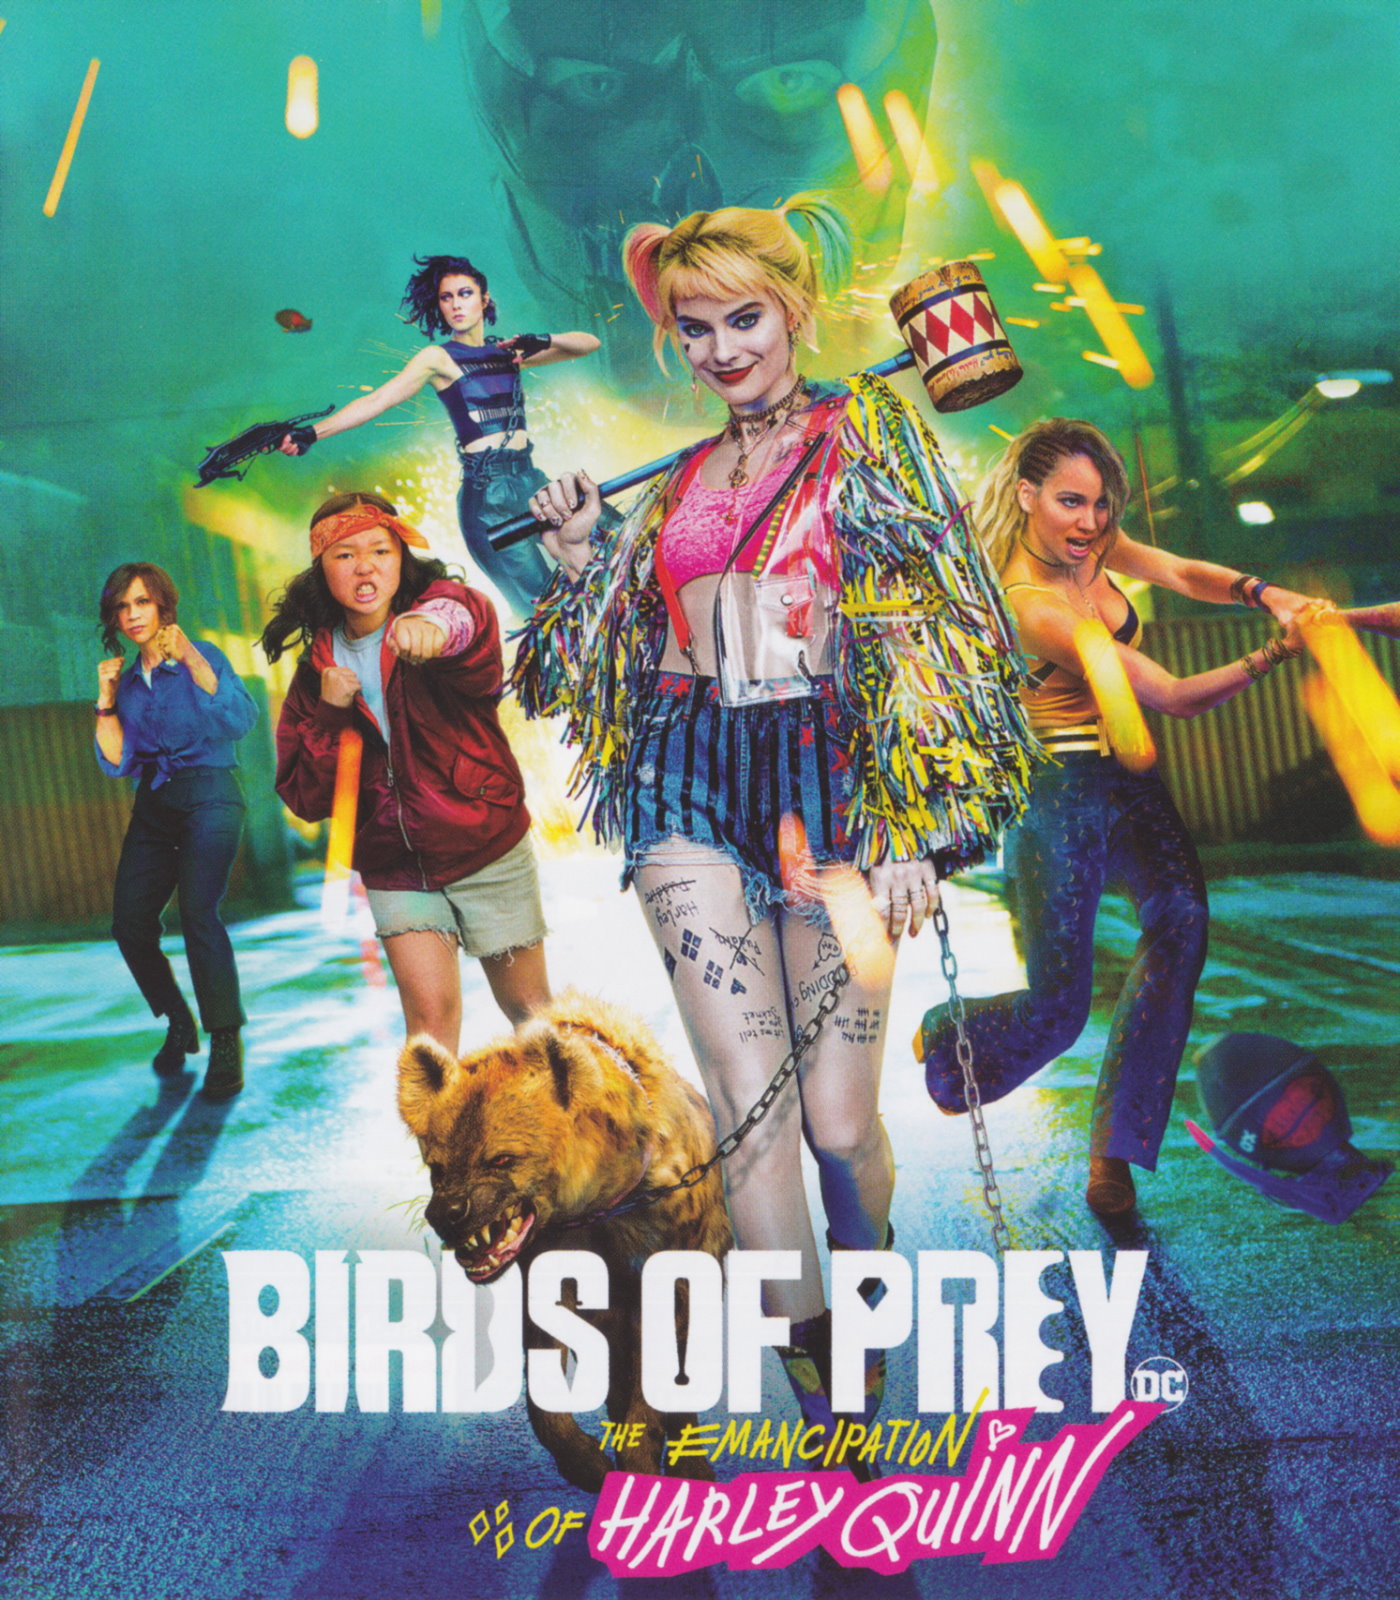 Cover - Birds of Prey - The Emancipation of Harley Quinn.jpg